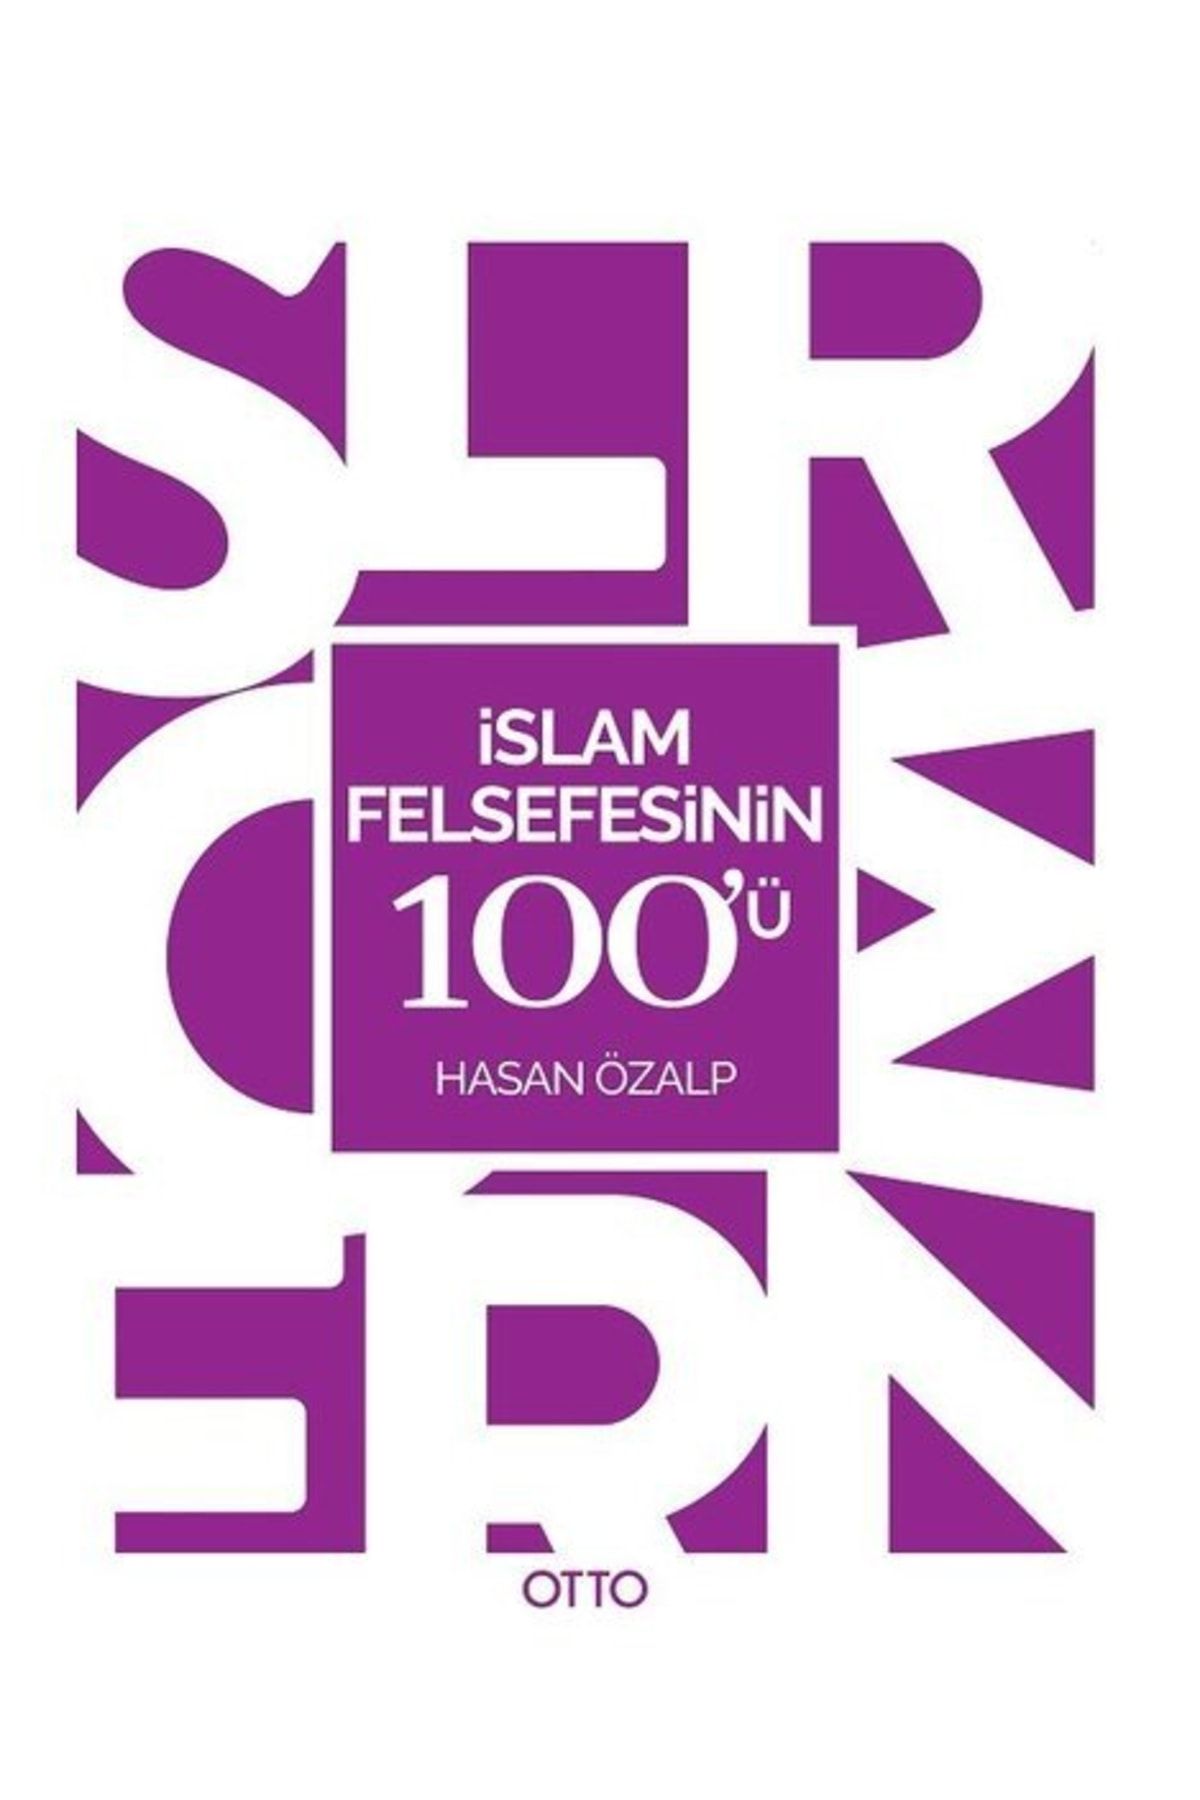 Otto Islam Felsefesinin 100'ü